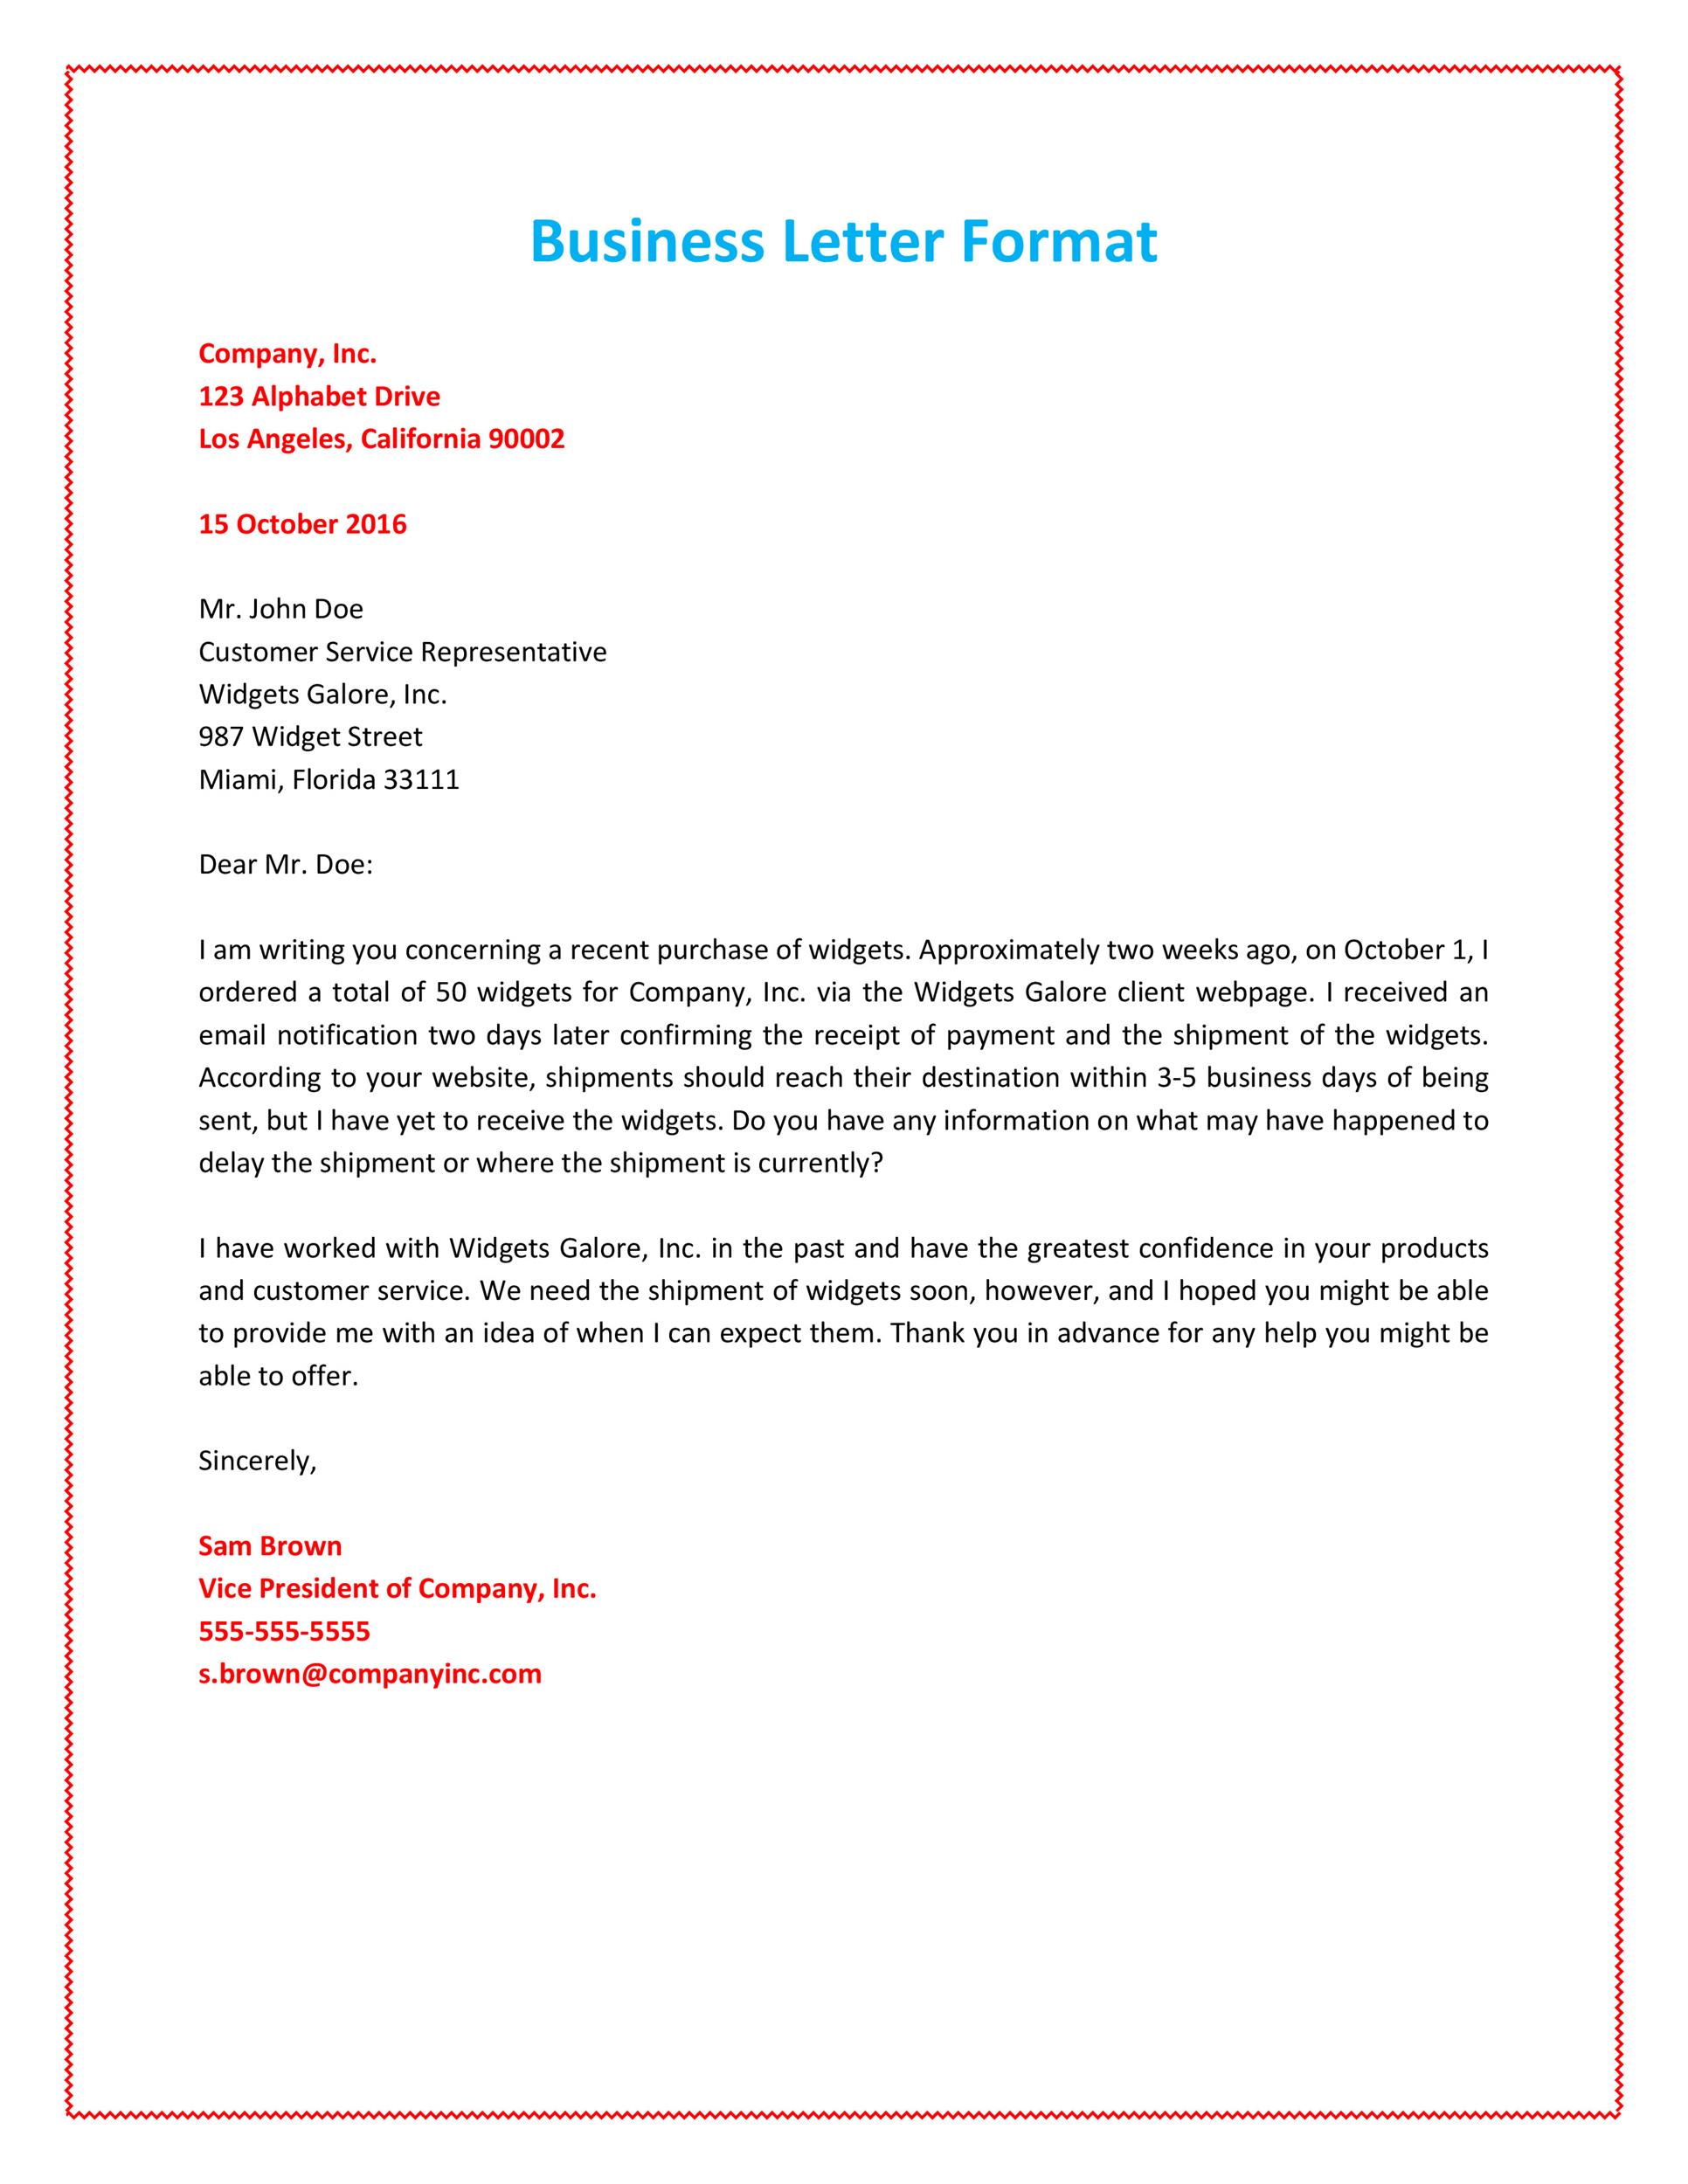 Business Letter Format Grude Interpretomics Co